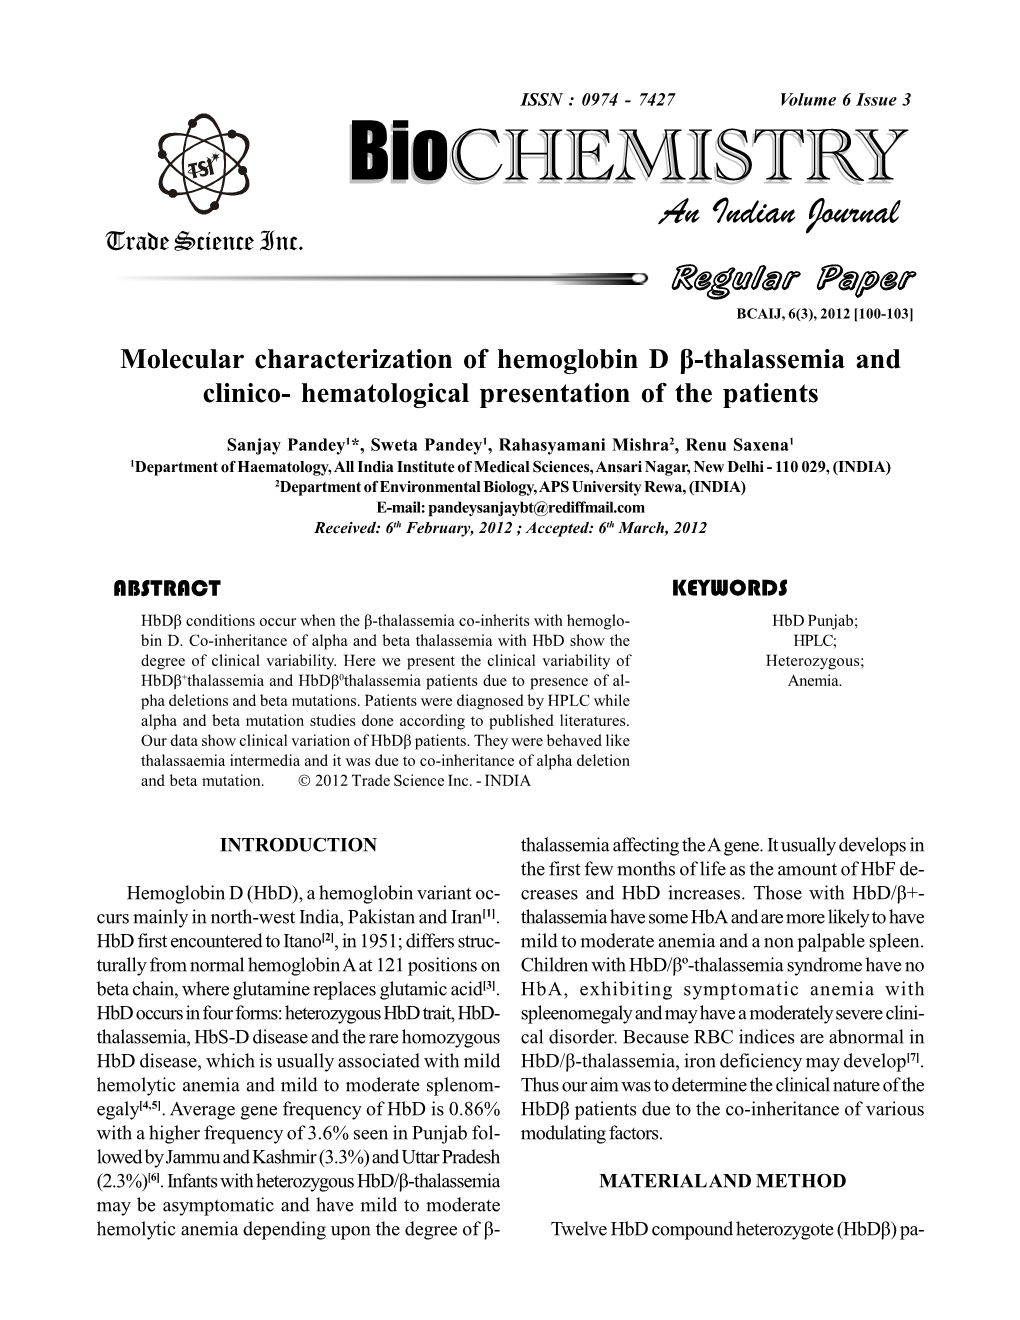 Molecular Characterization of Hemoglobin D Clinico- Hematological Presentation of the Patients